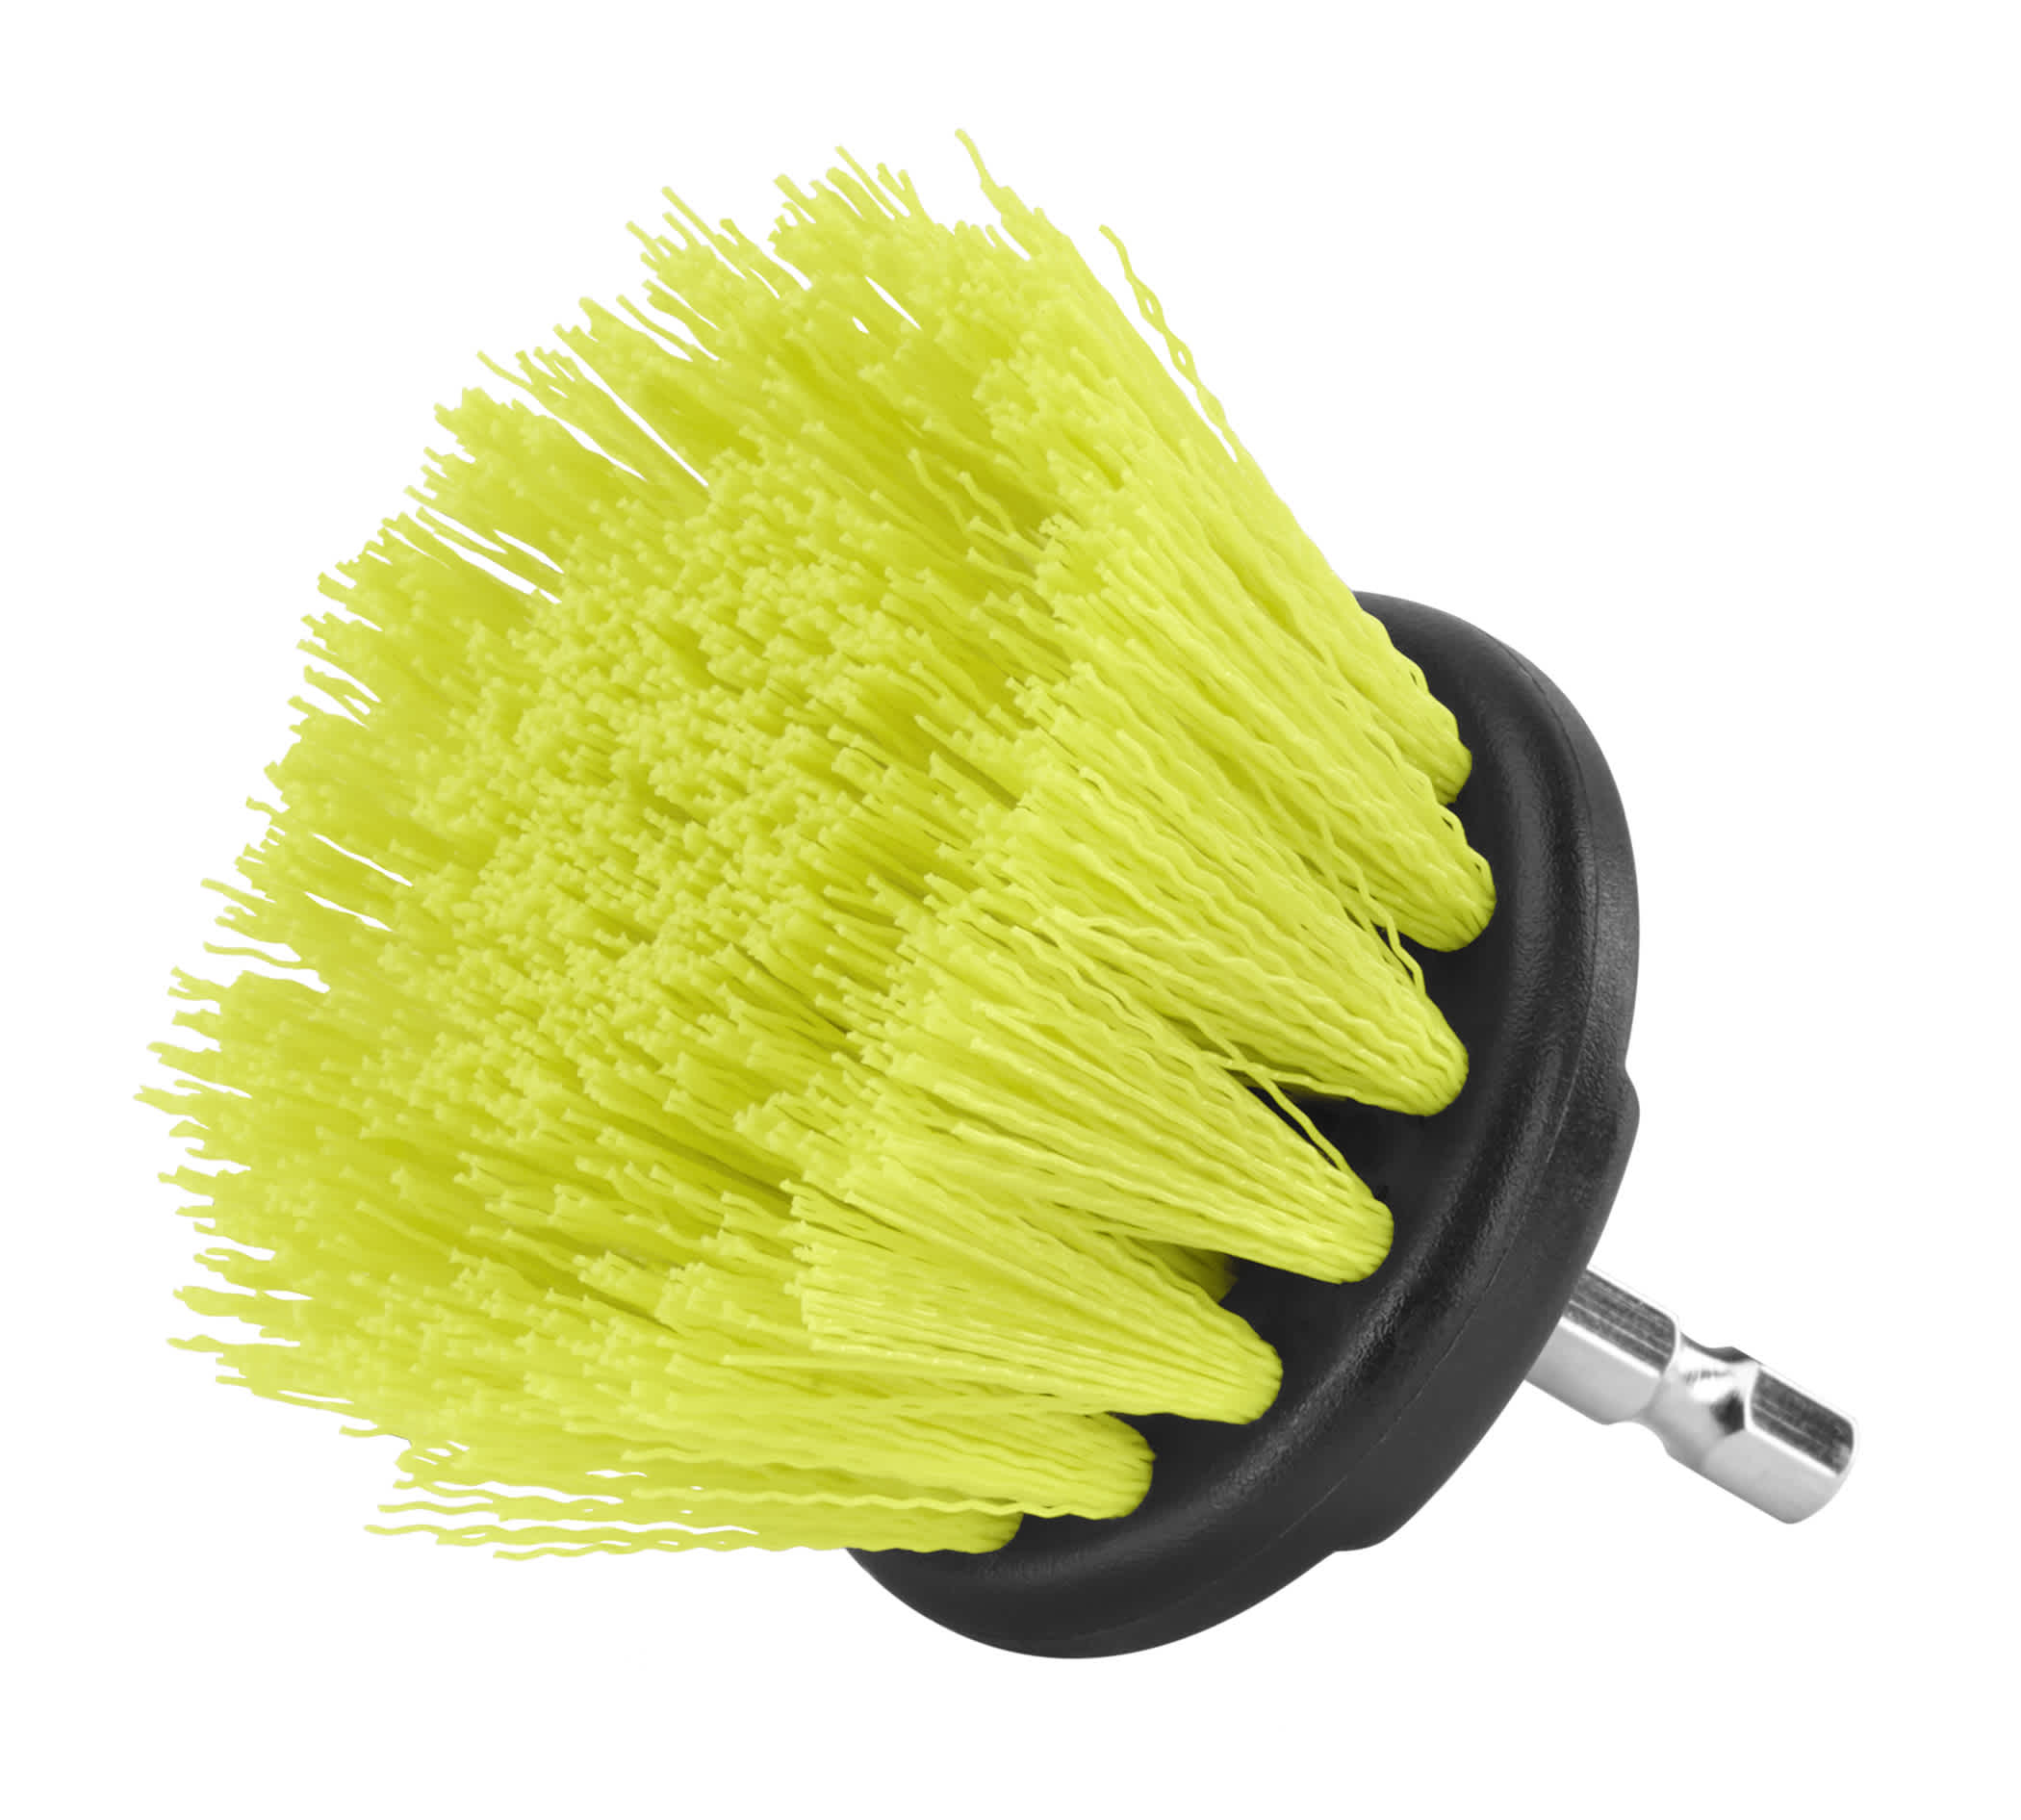 Drillbrush 2 pc. Medium Stiffness Cleaning Brush Kit, Kitchen